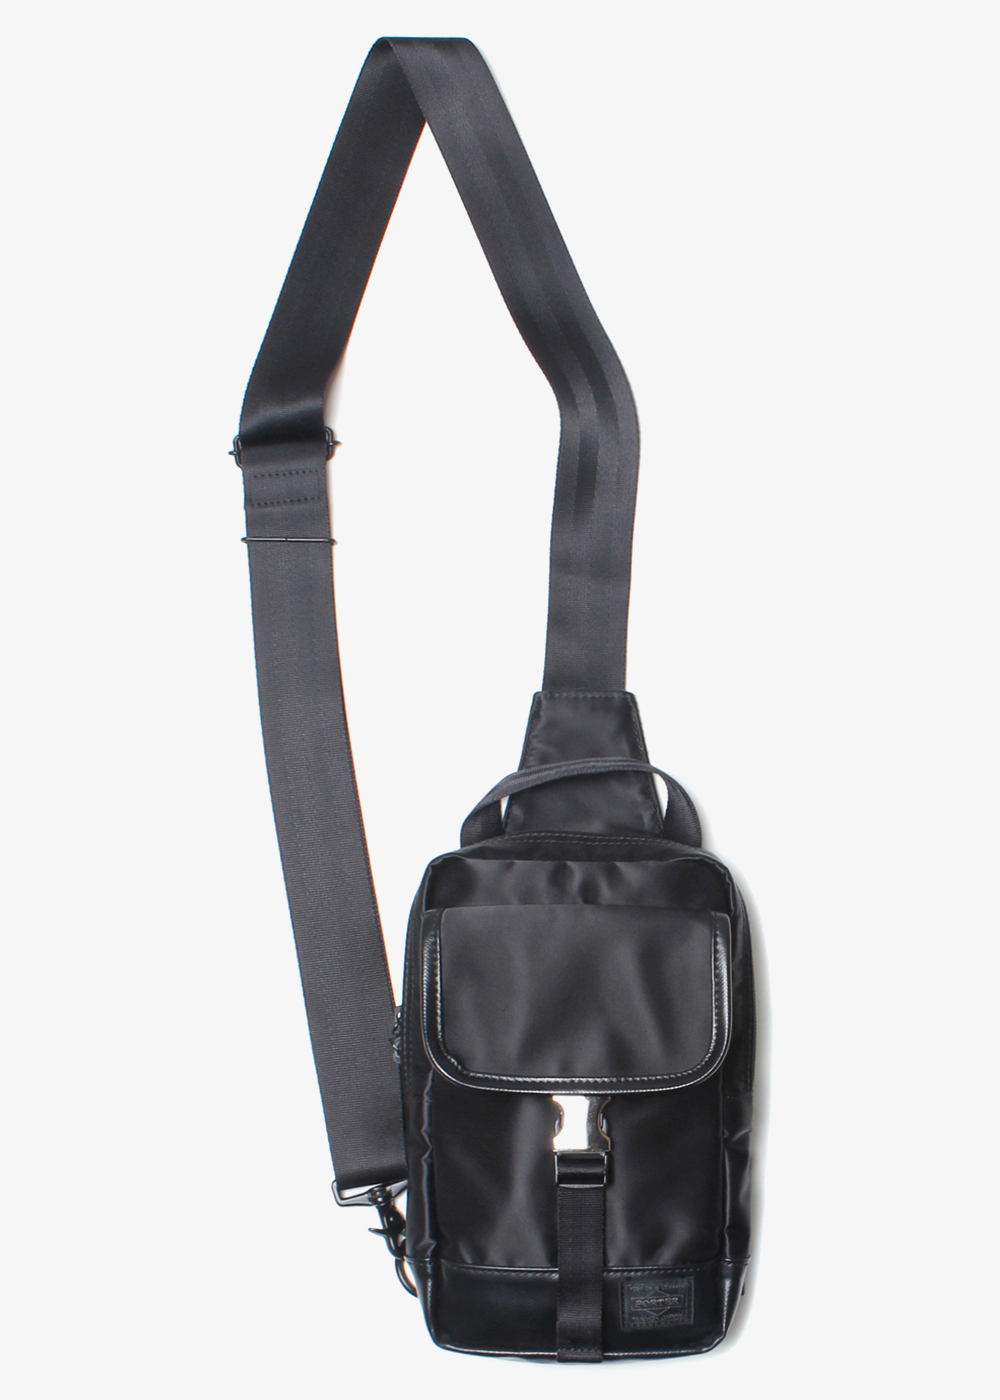 PORTERnylon leather sac’s shoulder bag